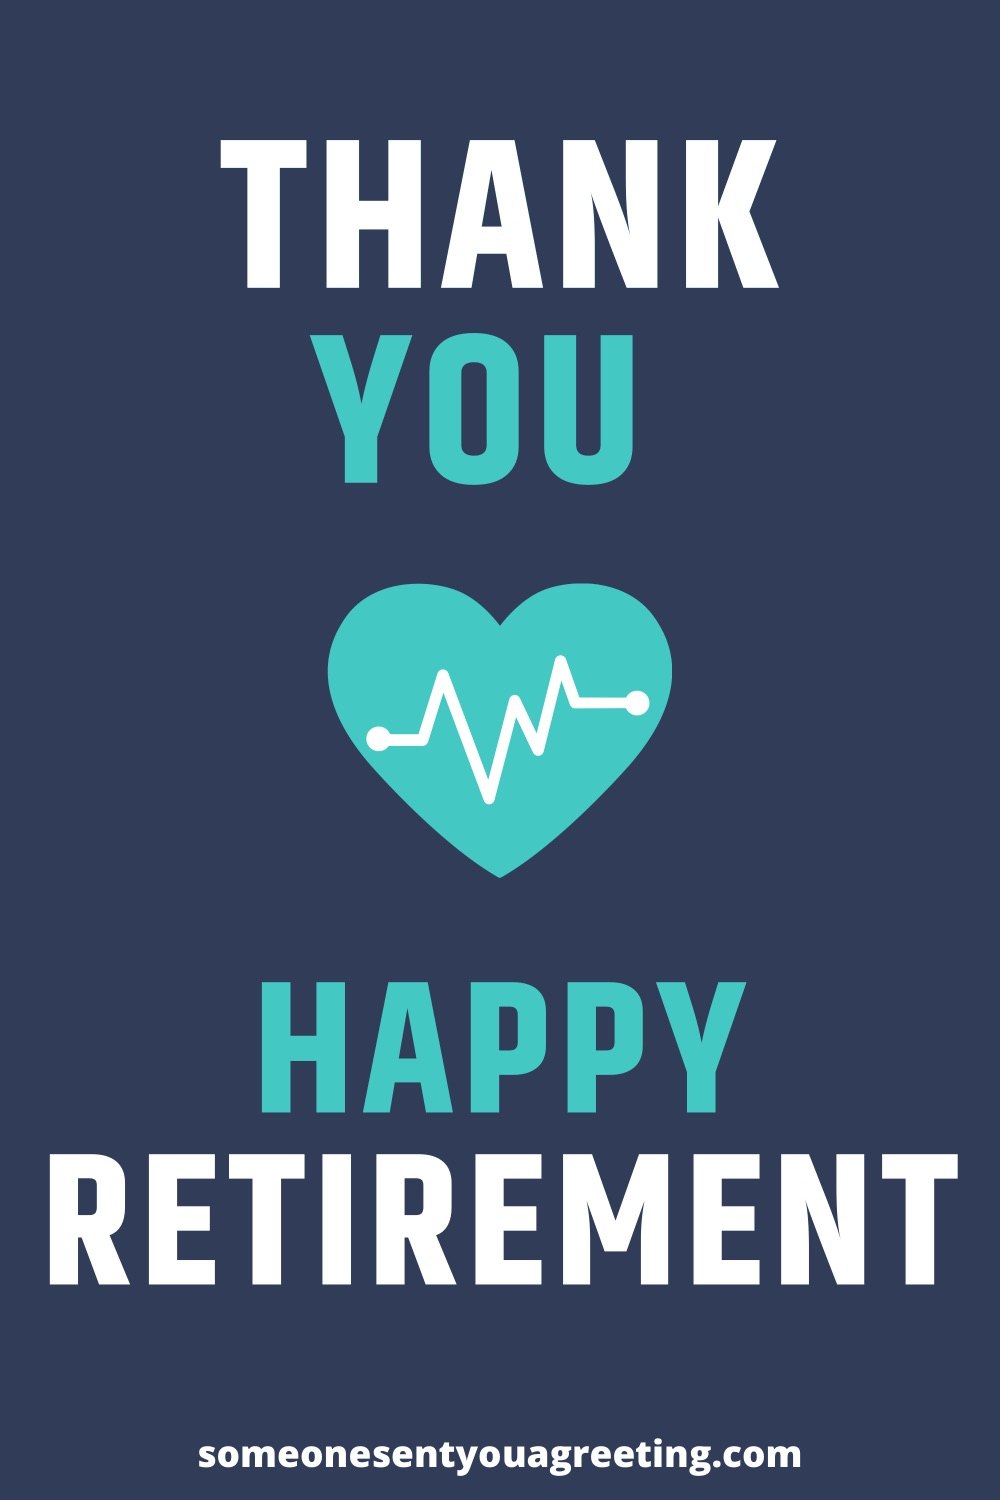 Happy retirement doctor